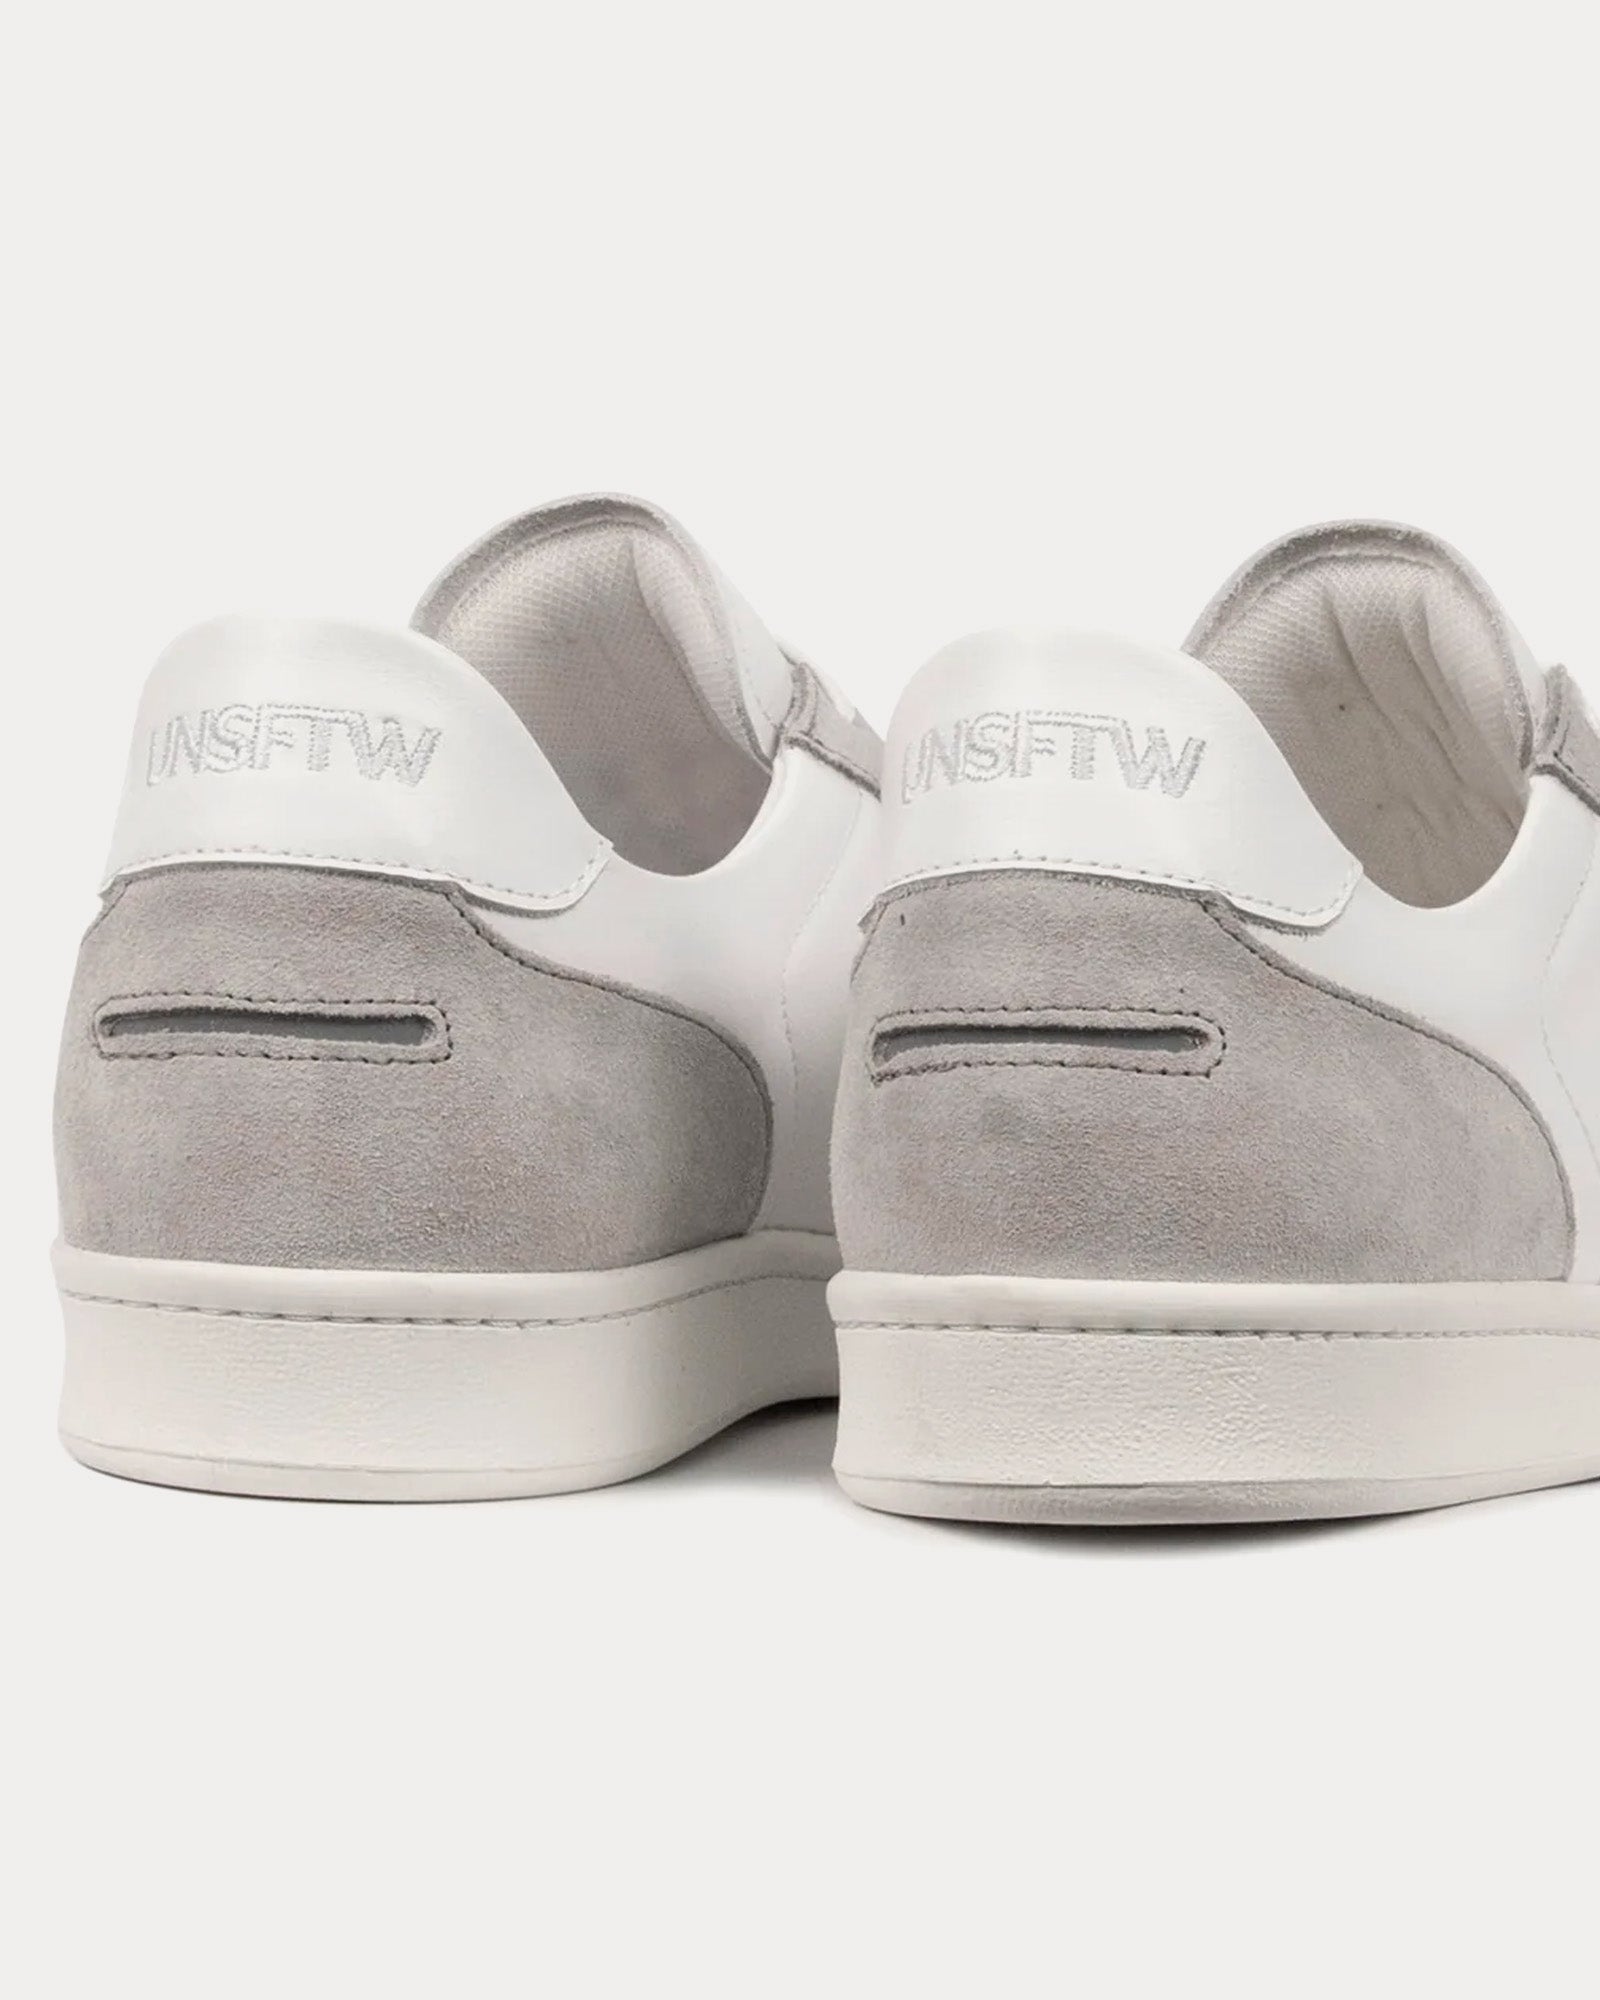 Unseen Footwear - Portelet Leather White / Grey Low Top Sneakers